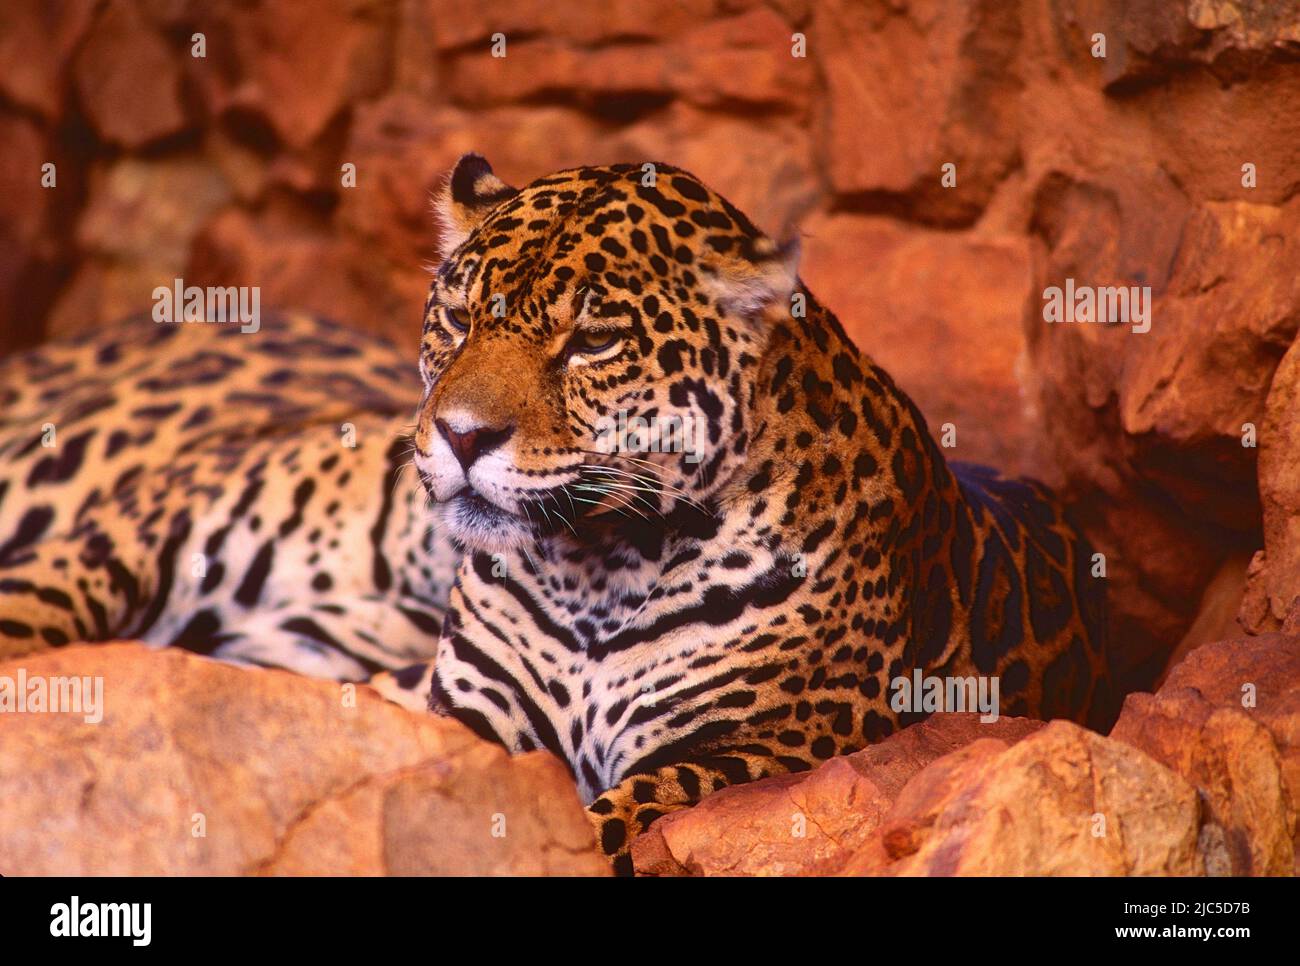 Jaguar, Panthera onca, Felidae, Raubtier, Säugetier. Tier, Zoo, Johannesburgo, Südafrika, Verbreitung Südamerika Foto de stock